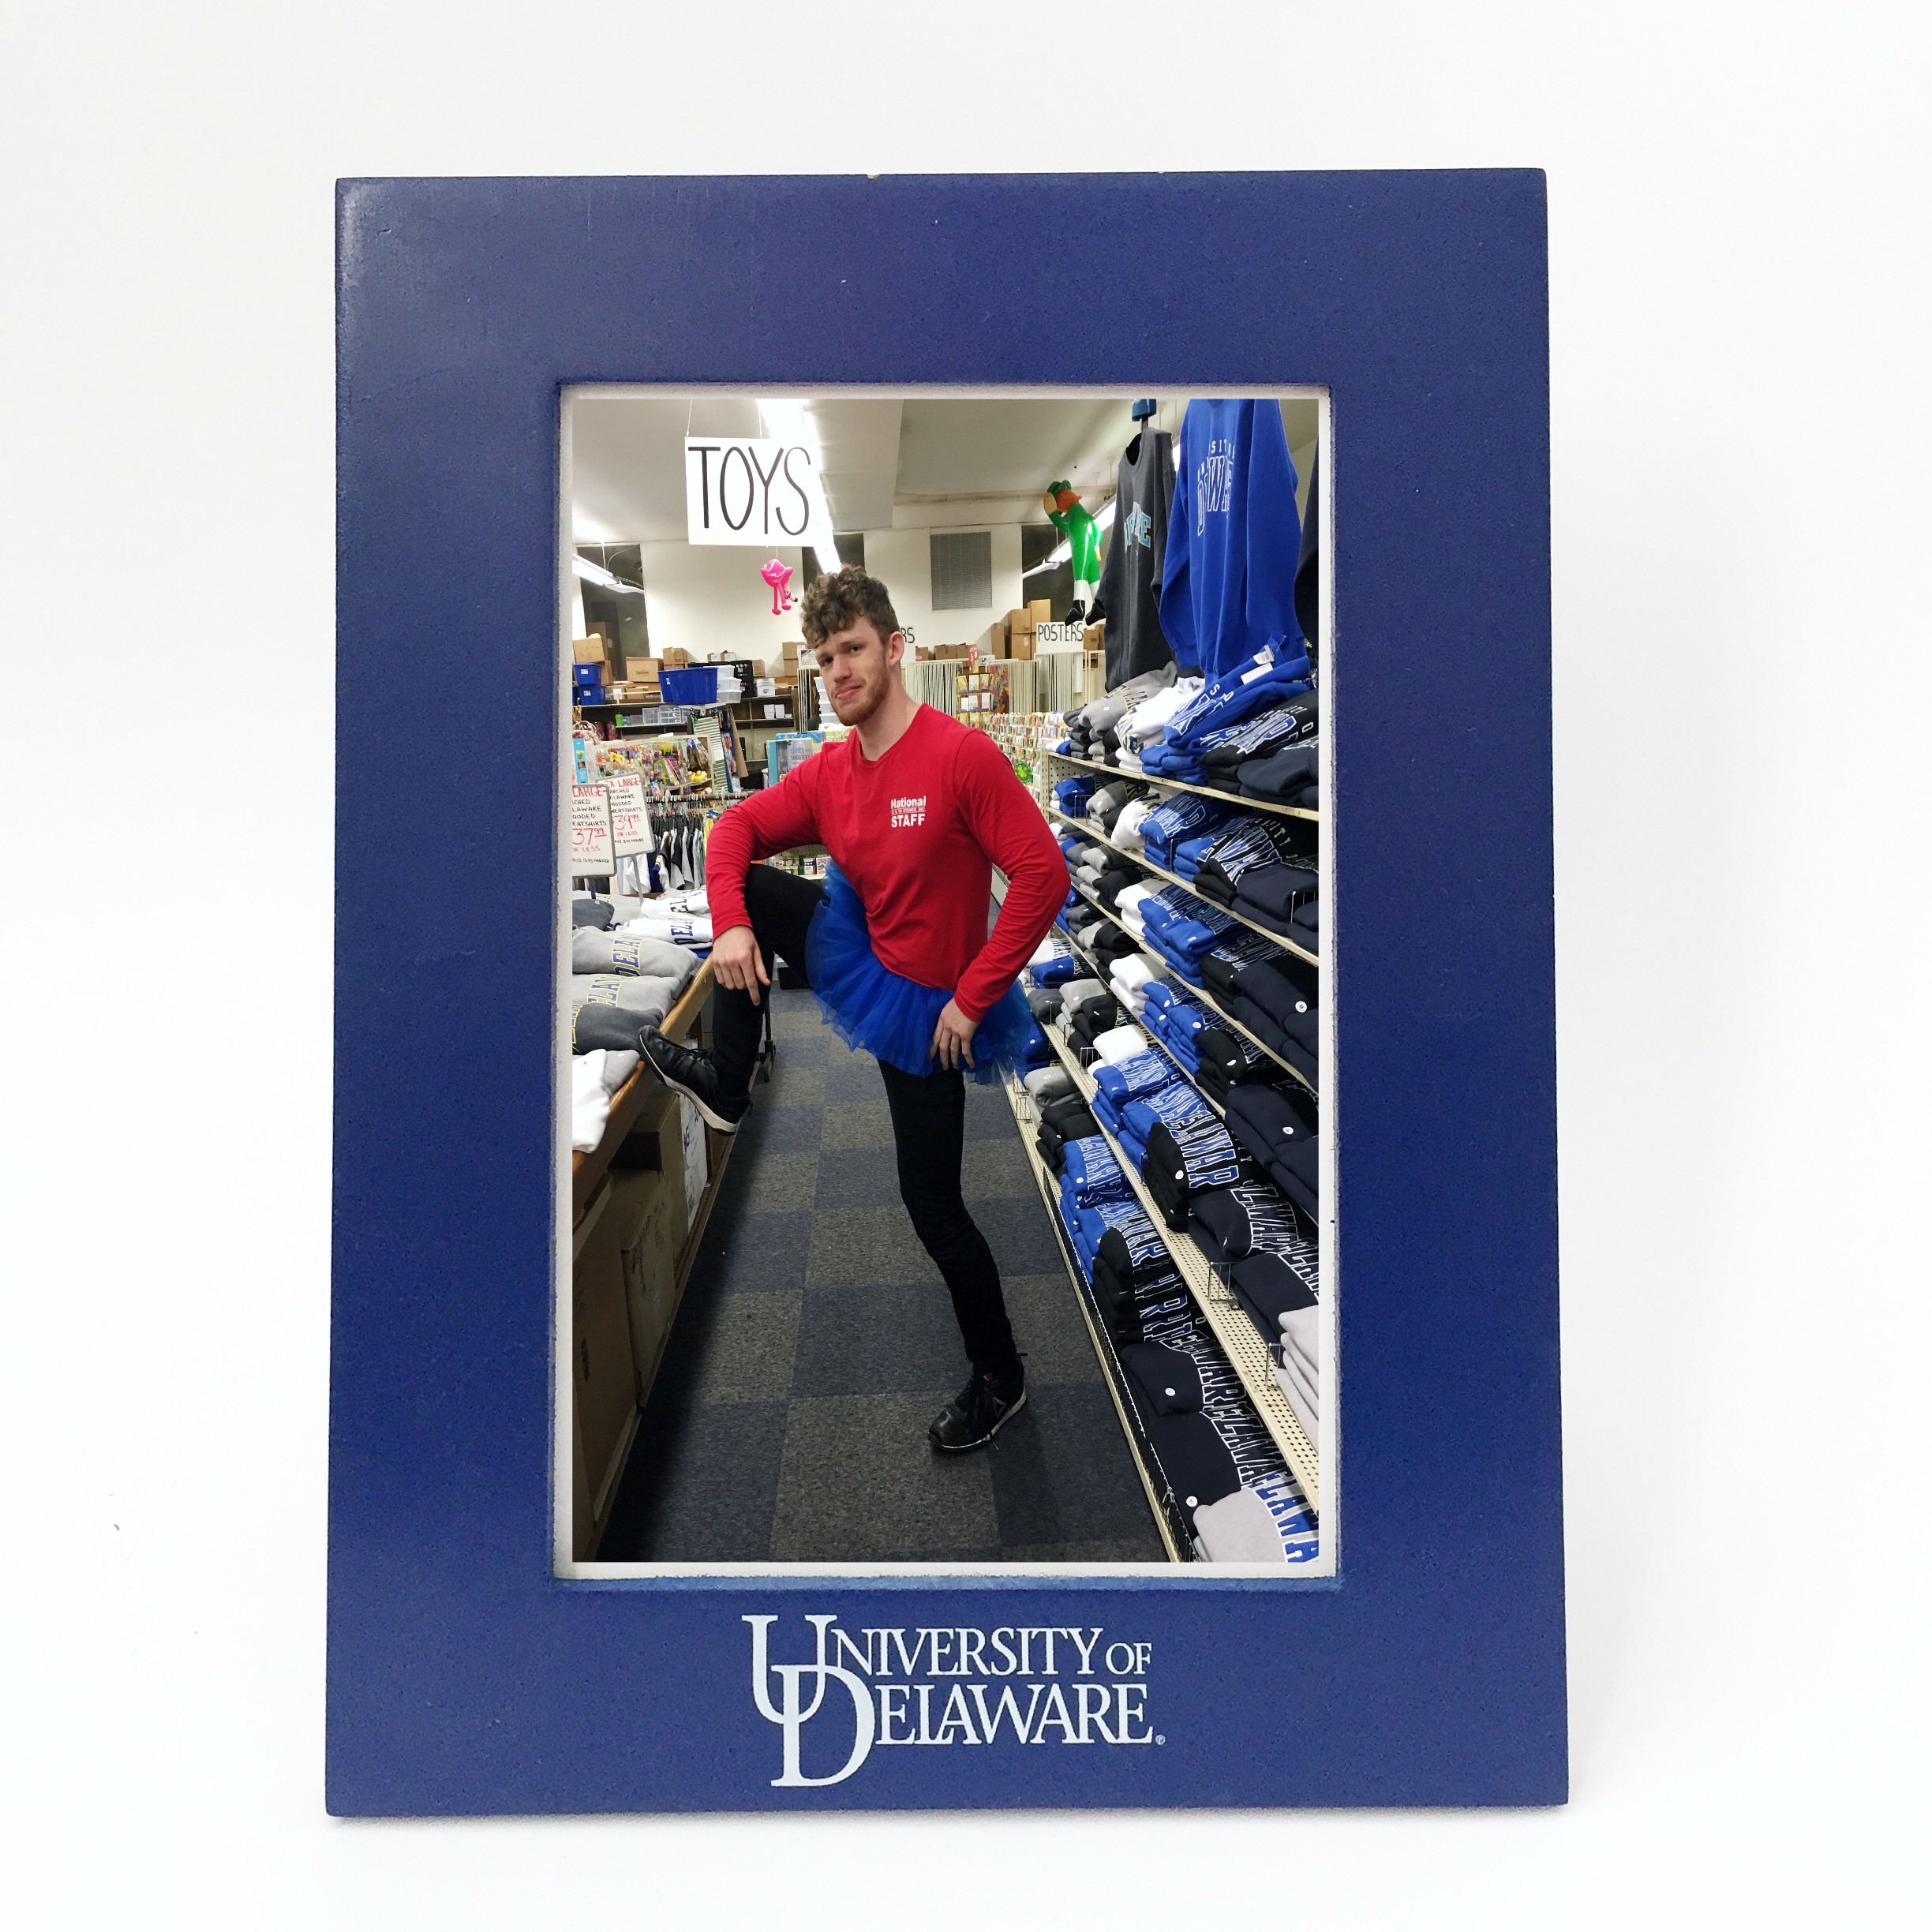 4x6 Brushed Metal Picture Frame Inc University of Delaware Blue LXG 